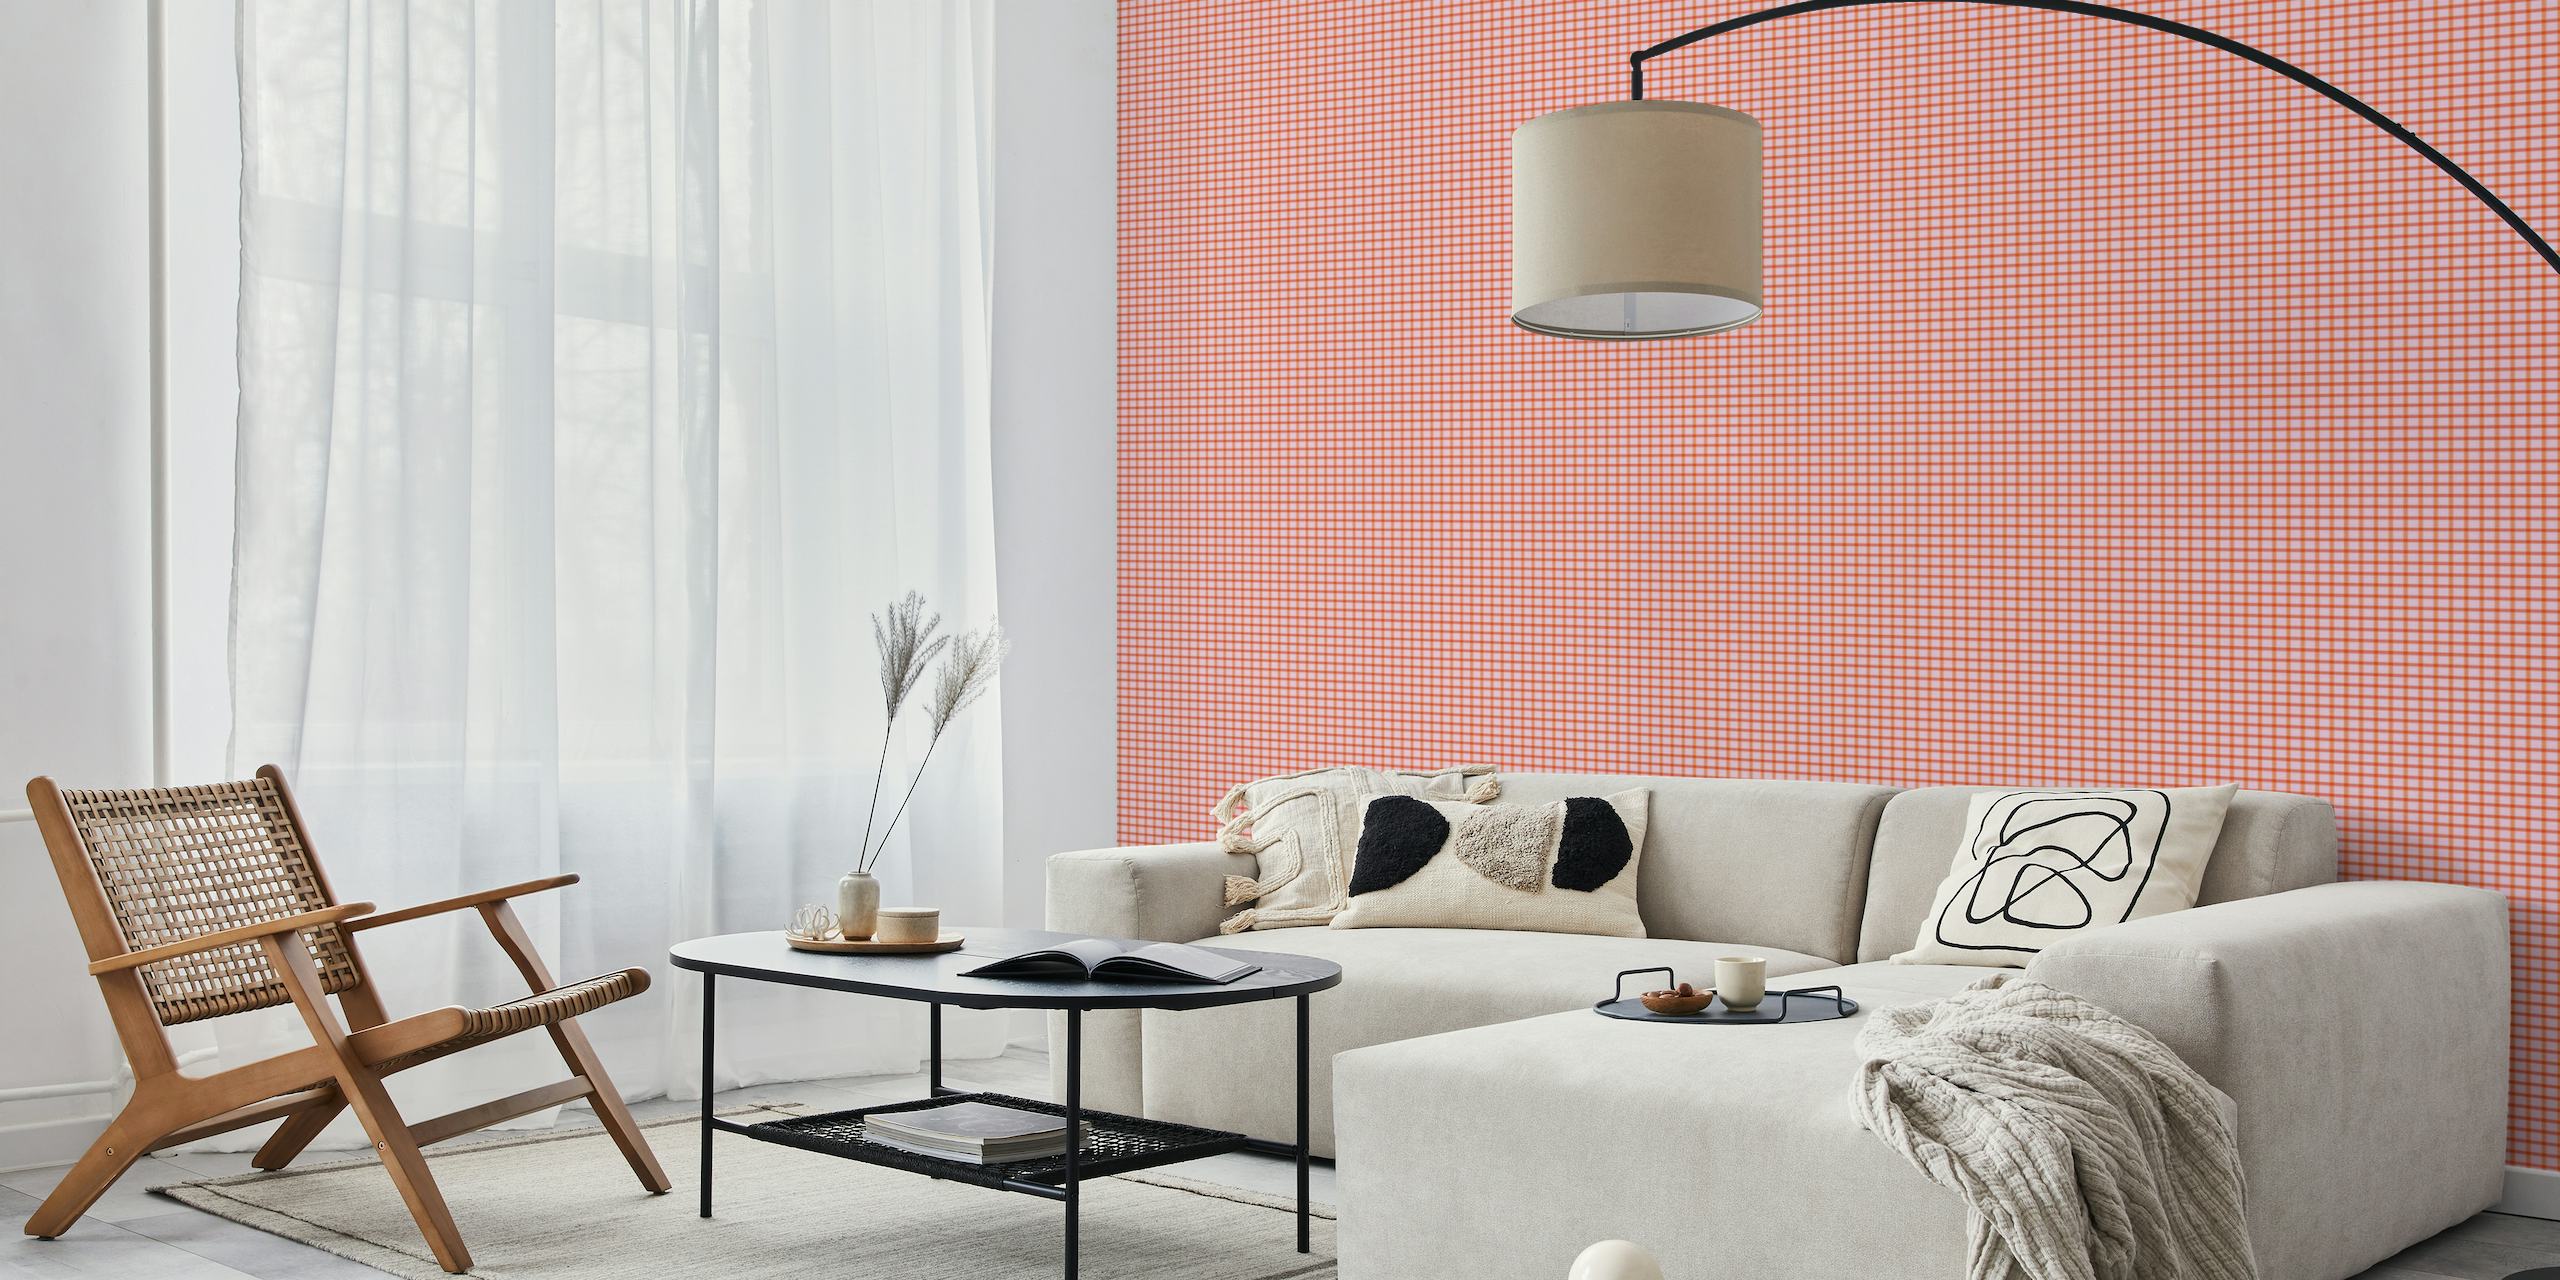 Modern Plaid Grid in Pastel Pink and Orange wallpaper